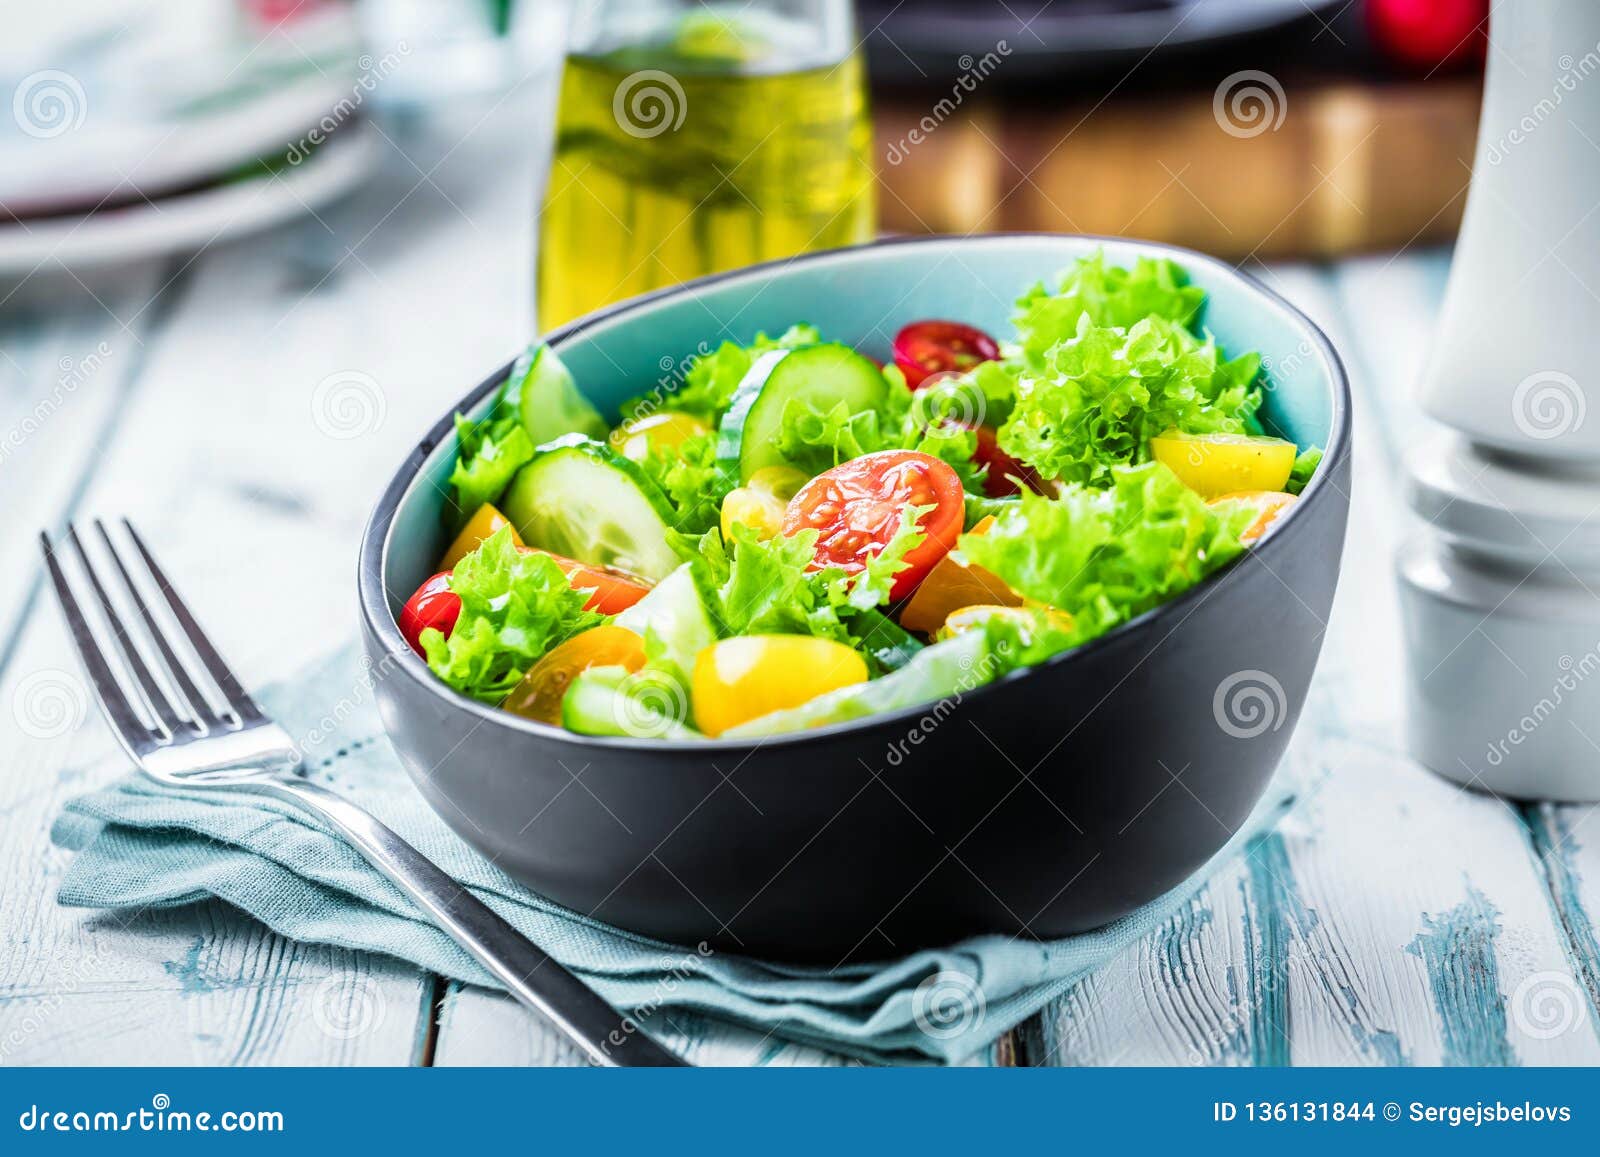 Vegetable Salad Bowl on Kitchen Table. Balanced Diet Stock Photo ...